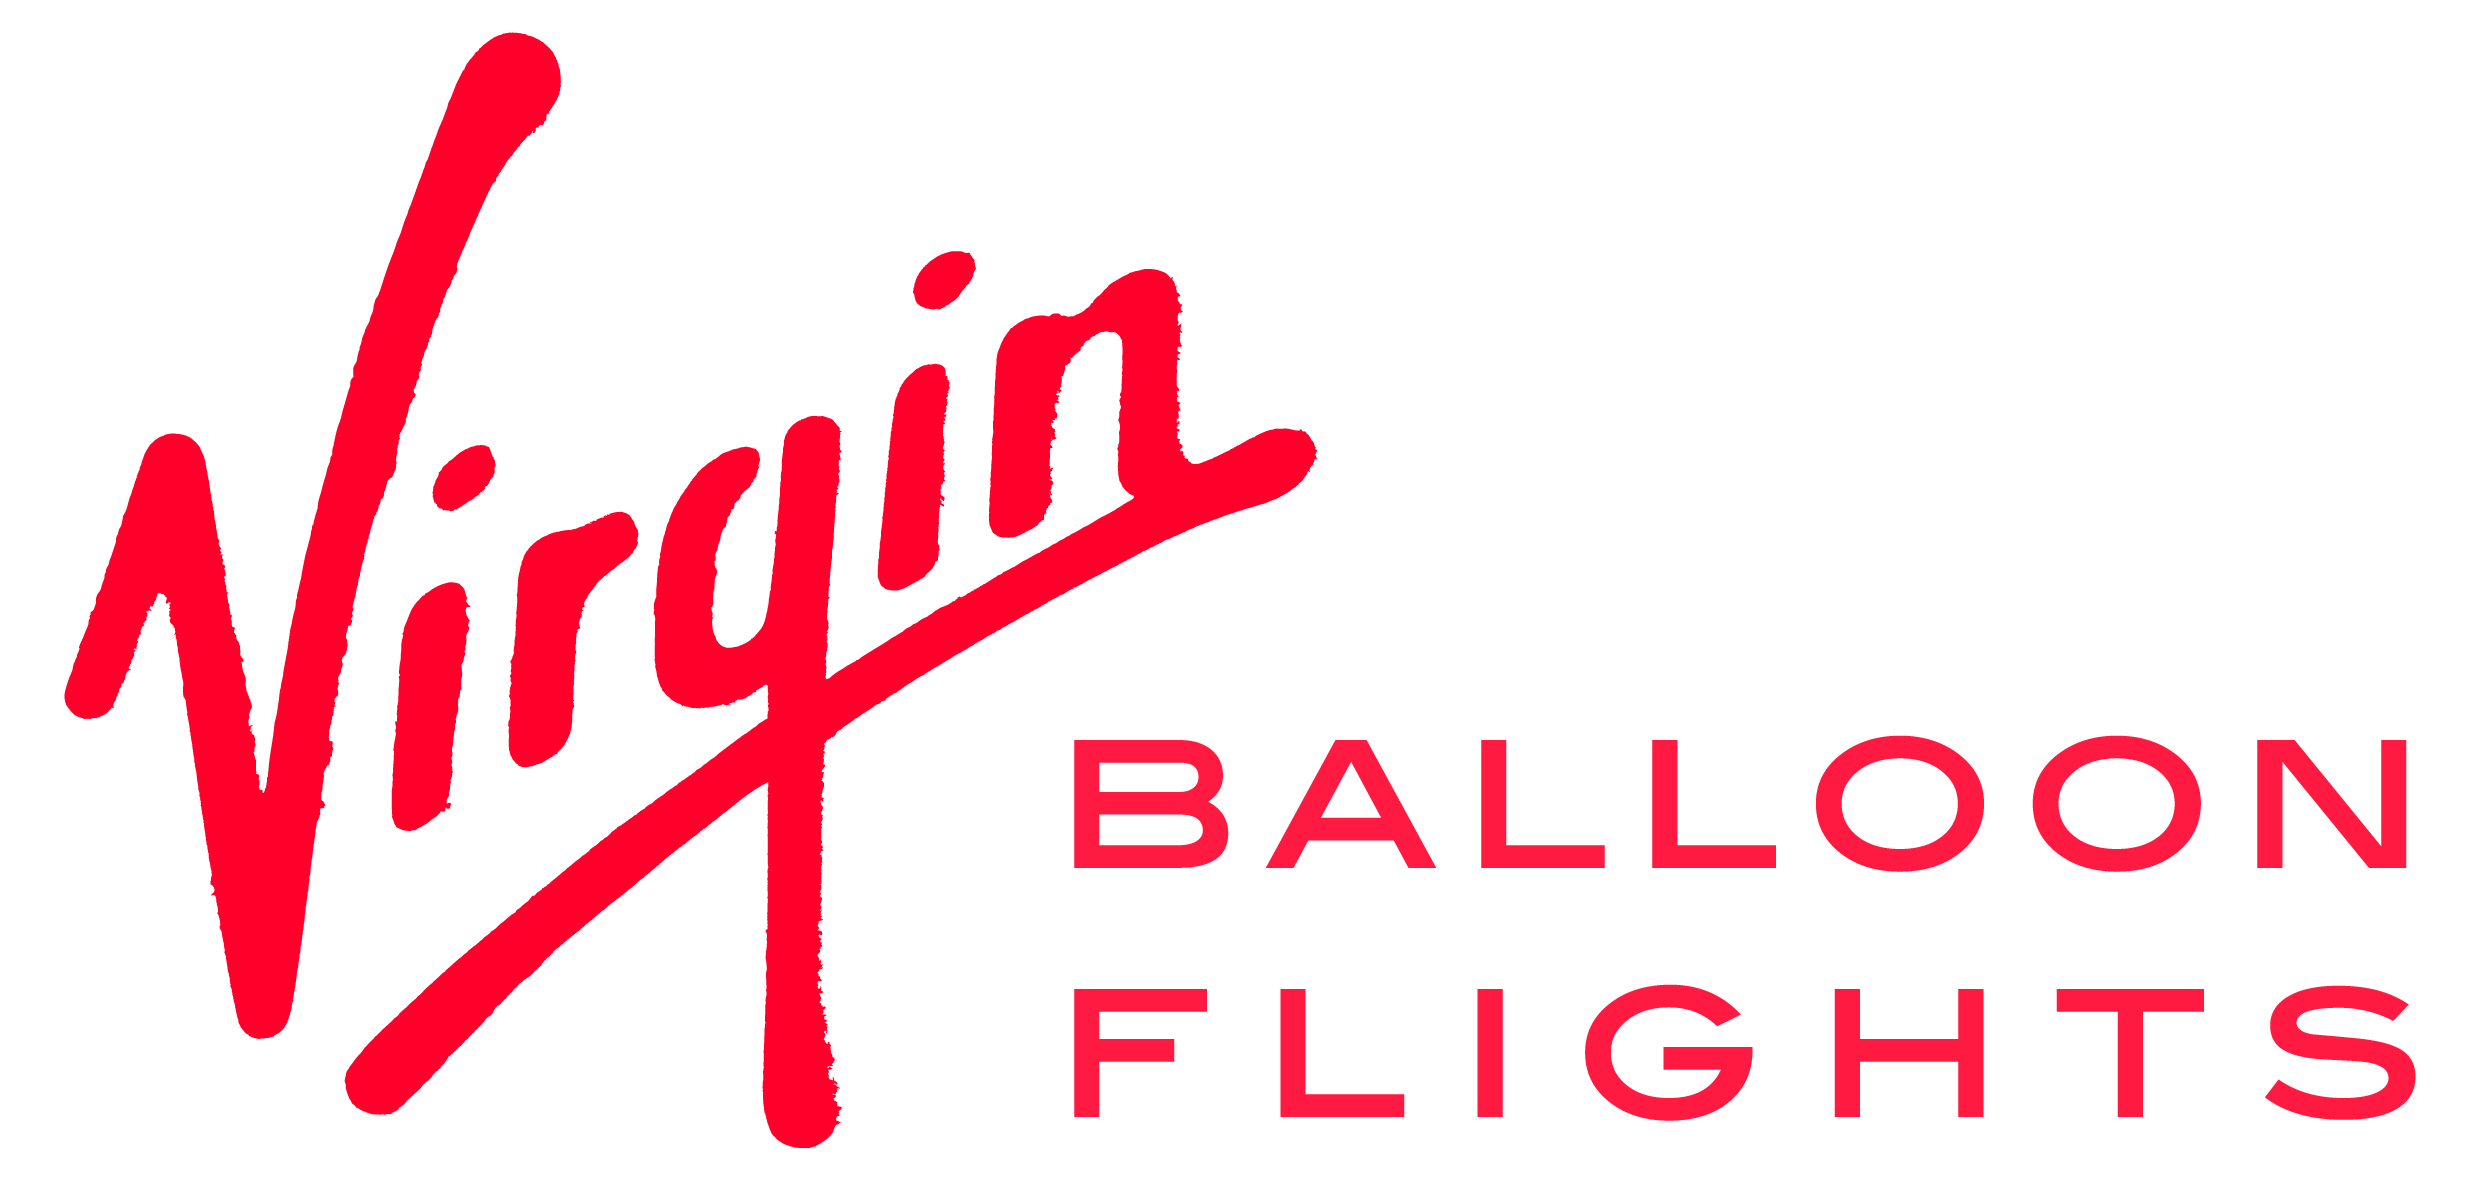 Virgin Balloon Flights logo red cmyk